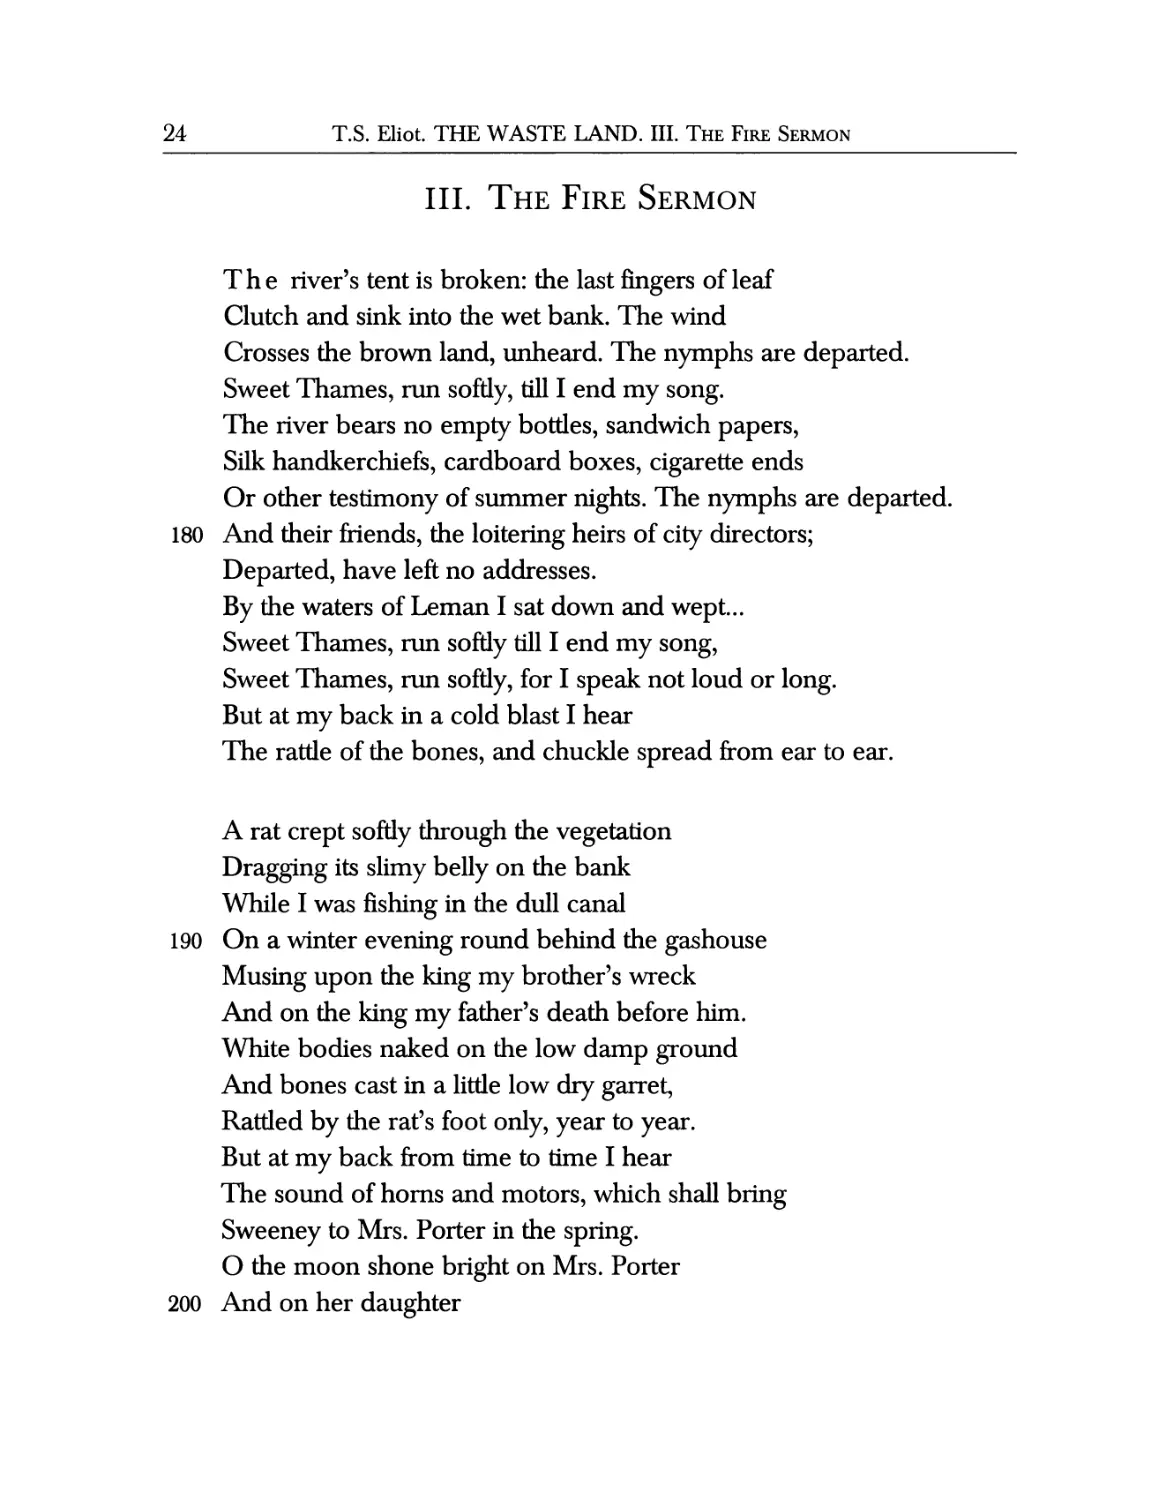 III. The Fire Sermon